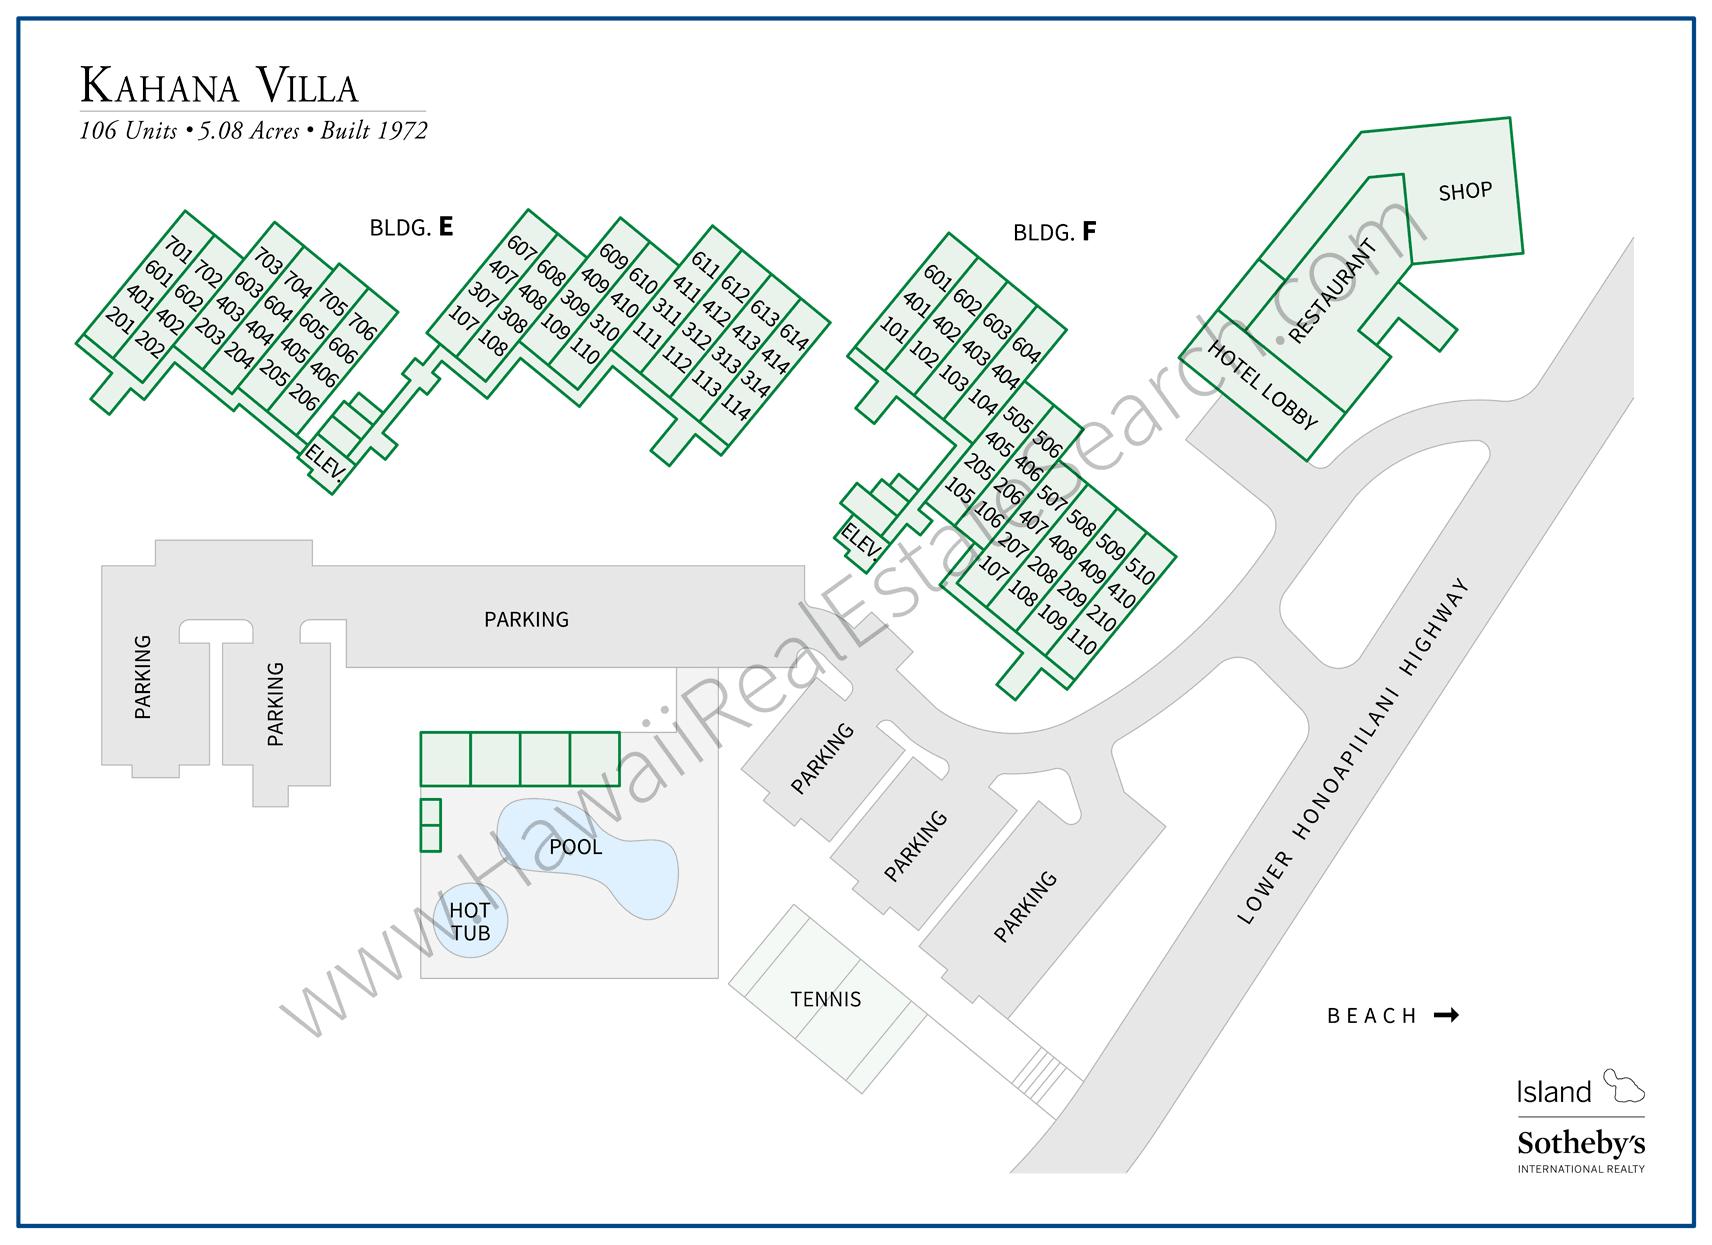 Kahana Villa Map Updated